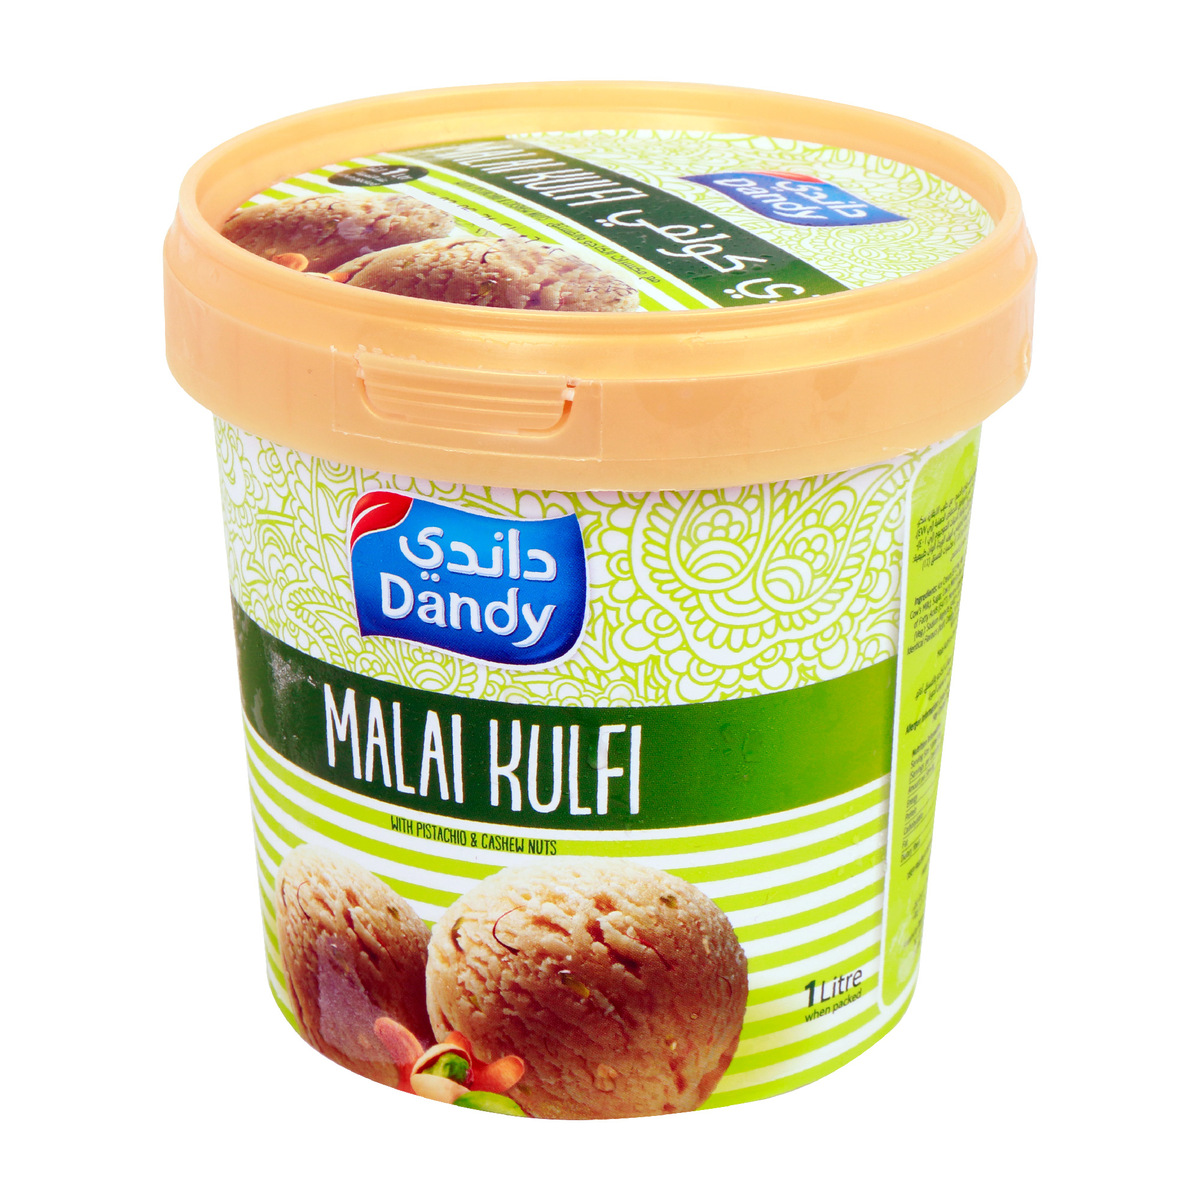 Dandy Ice Cream Malai Kulfi With Pistachio & Cashew Nuts 1Litre